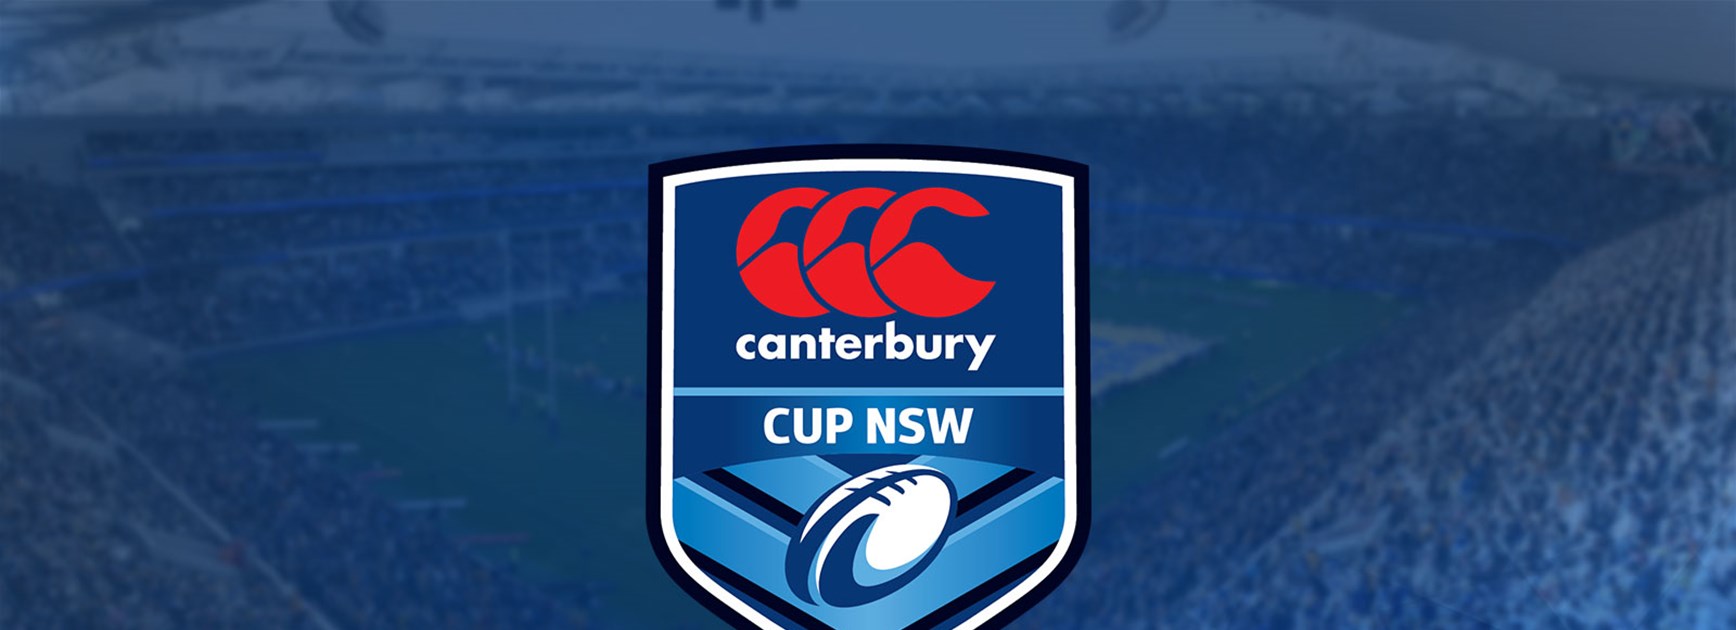 Pre-purchase tickets to save, thanks to Canterbury Australia